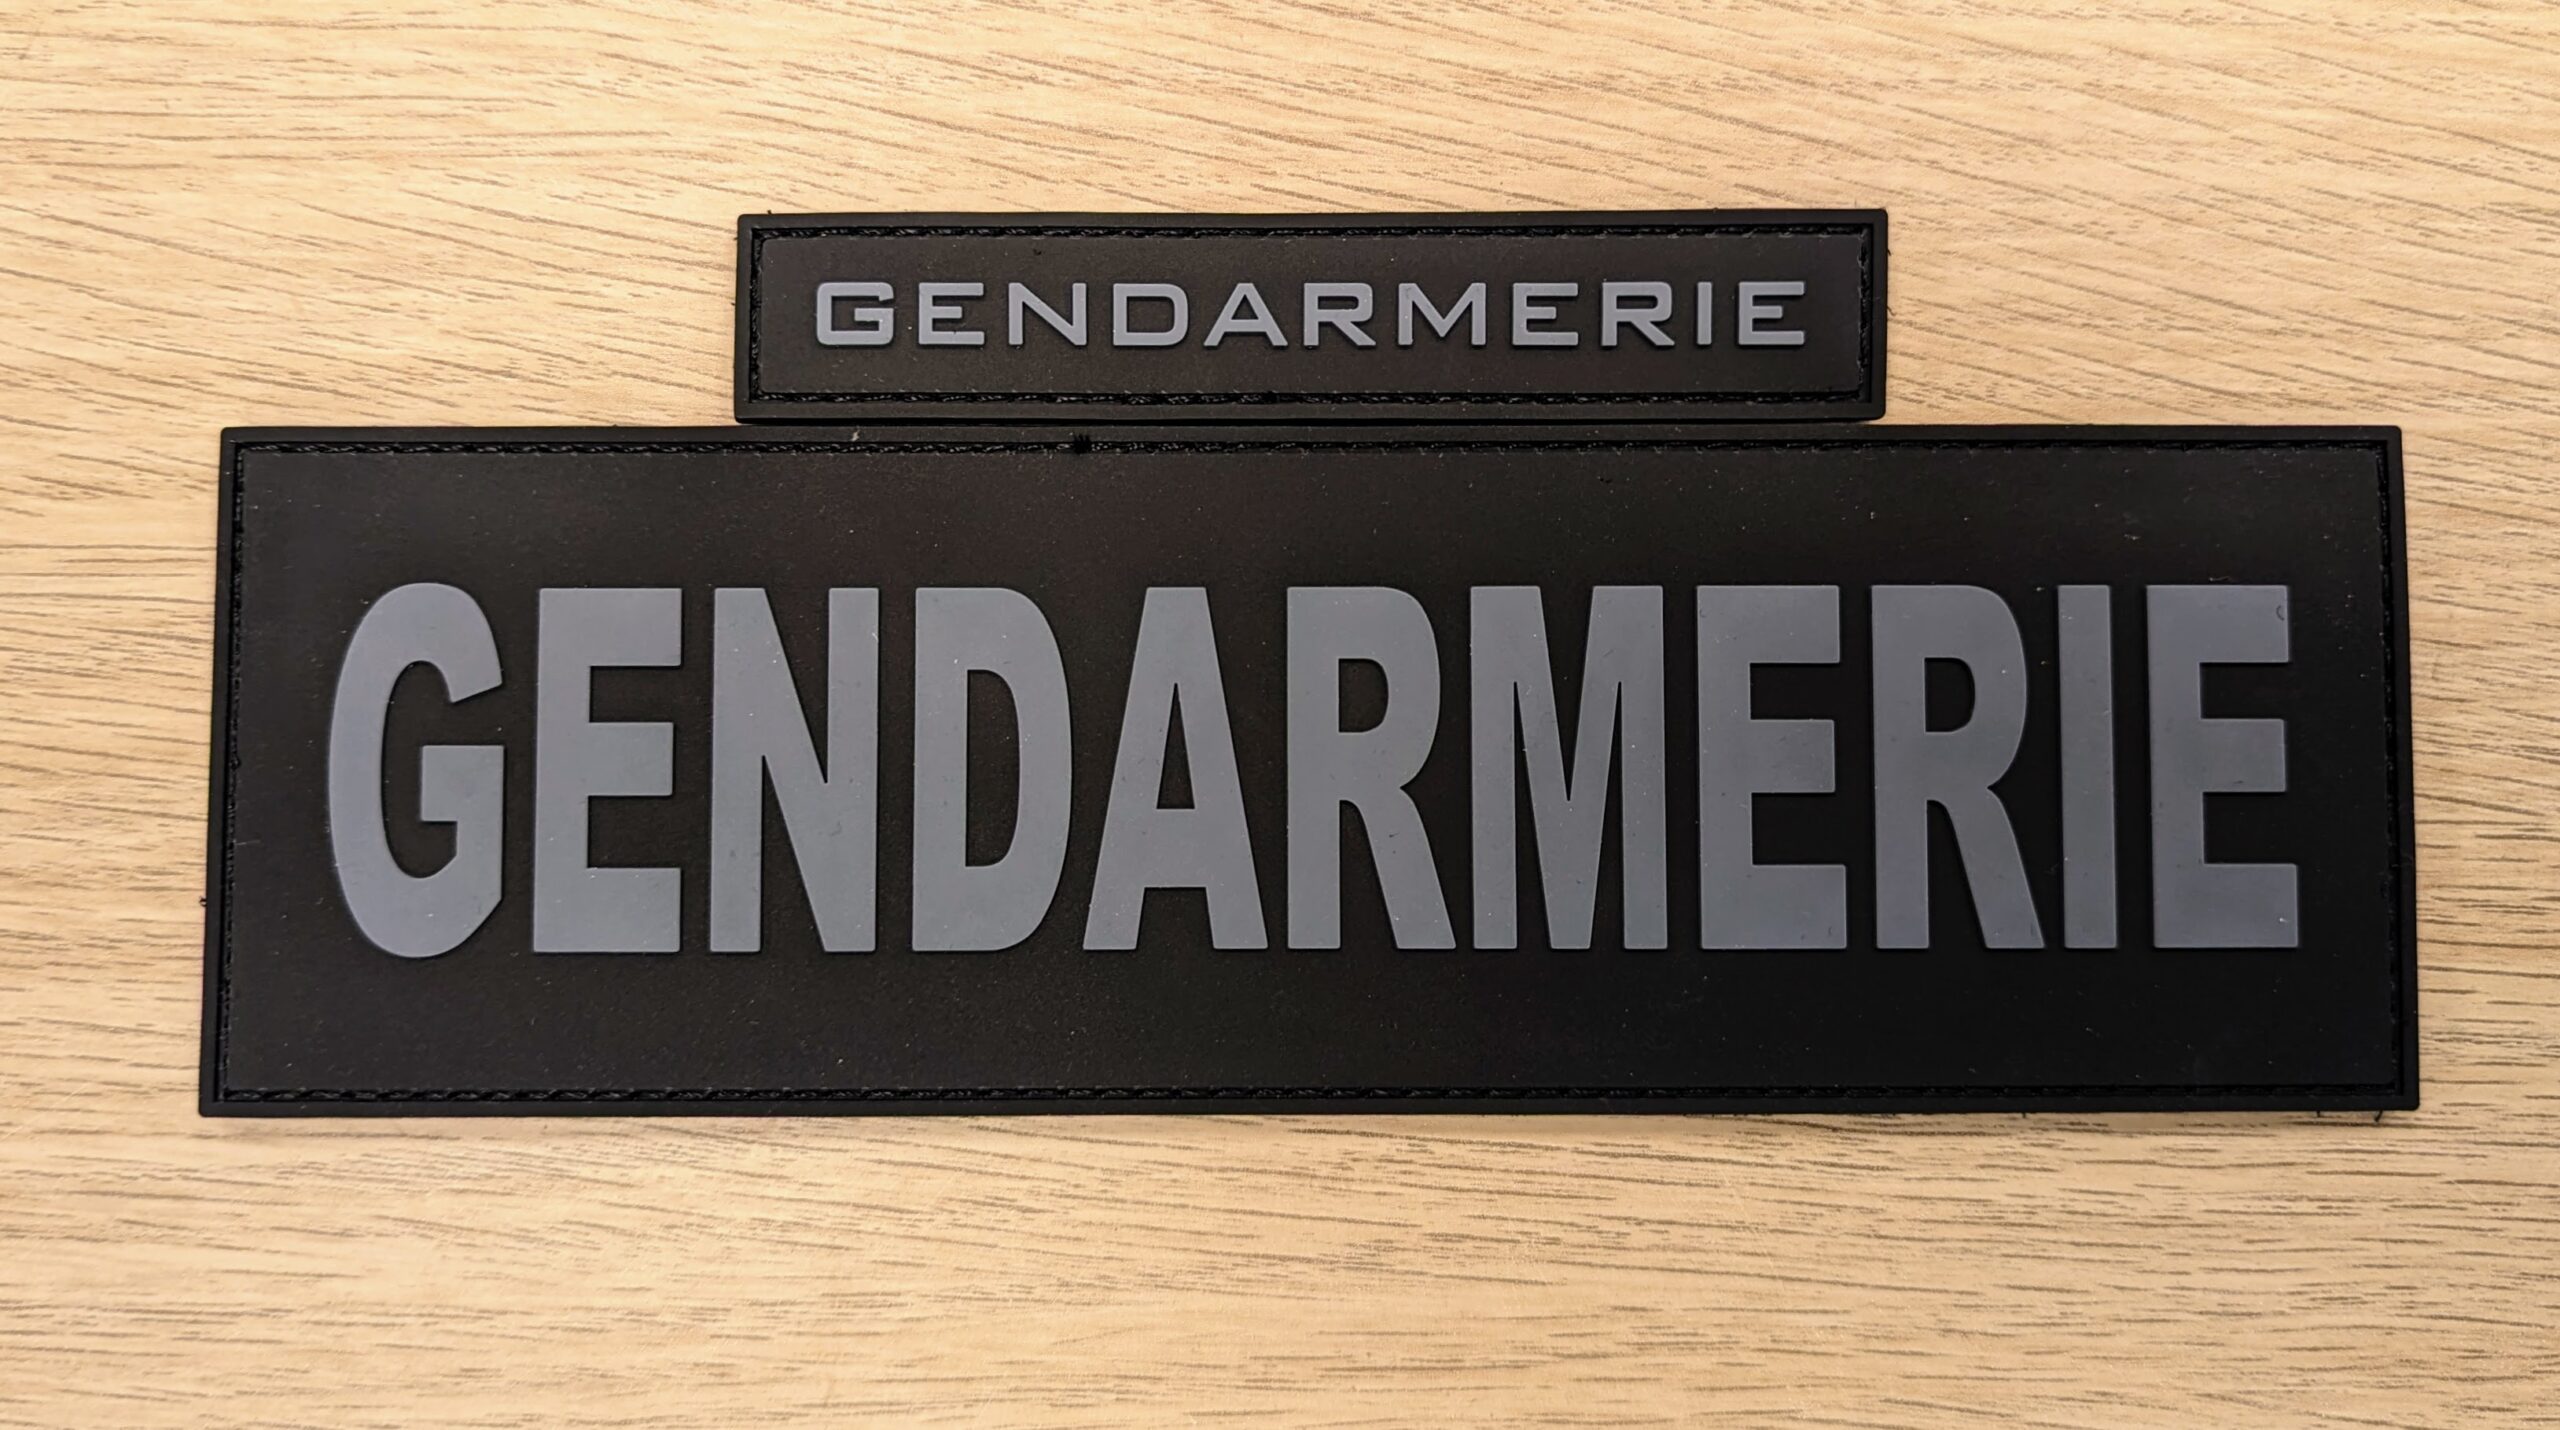 Bande dorsale et bande patro ( patronyme) gendarmerie nationale en kit, BV ( basse visibilité gris) 